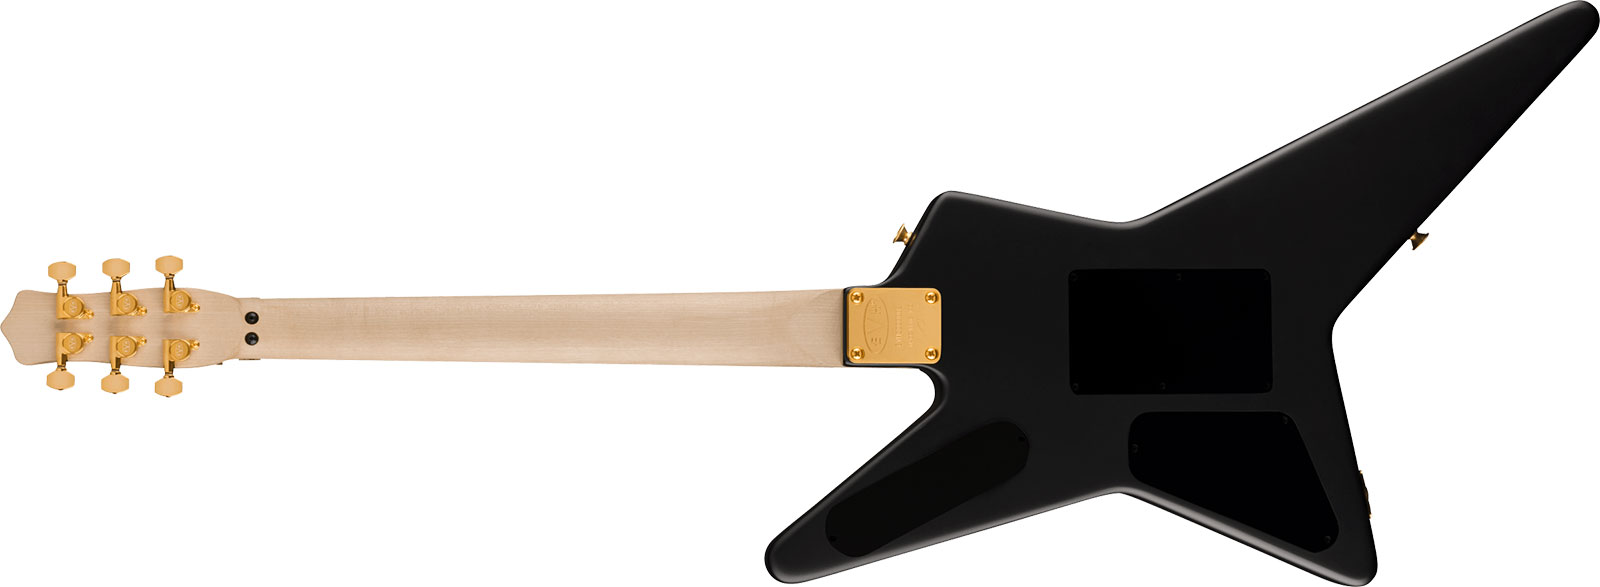 Evh Star Limited Edition 1h Fr Eb - Stealth Black With Gold Hardware - Guitare Électrique MÉtal - Variation 1